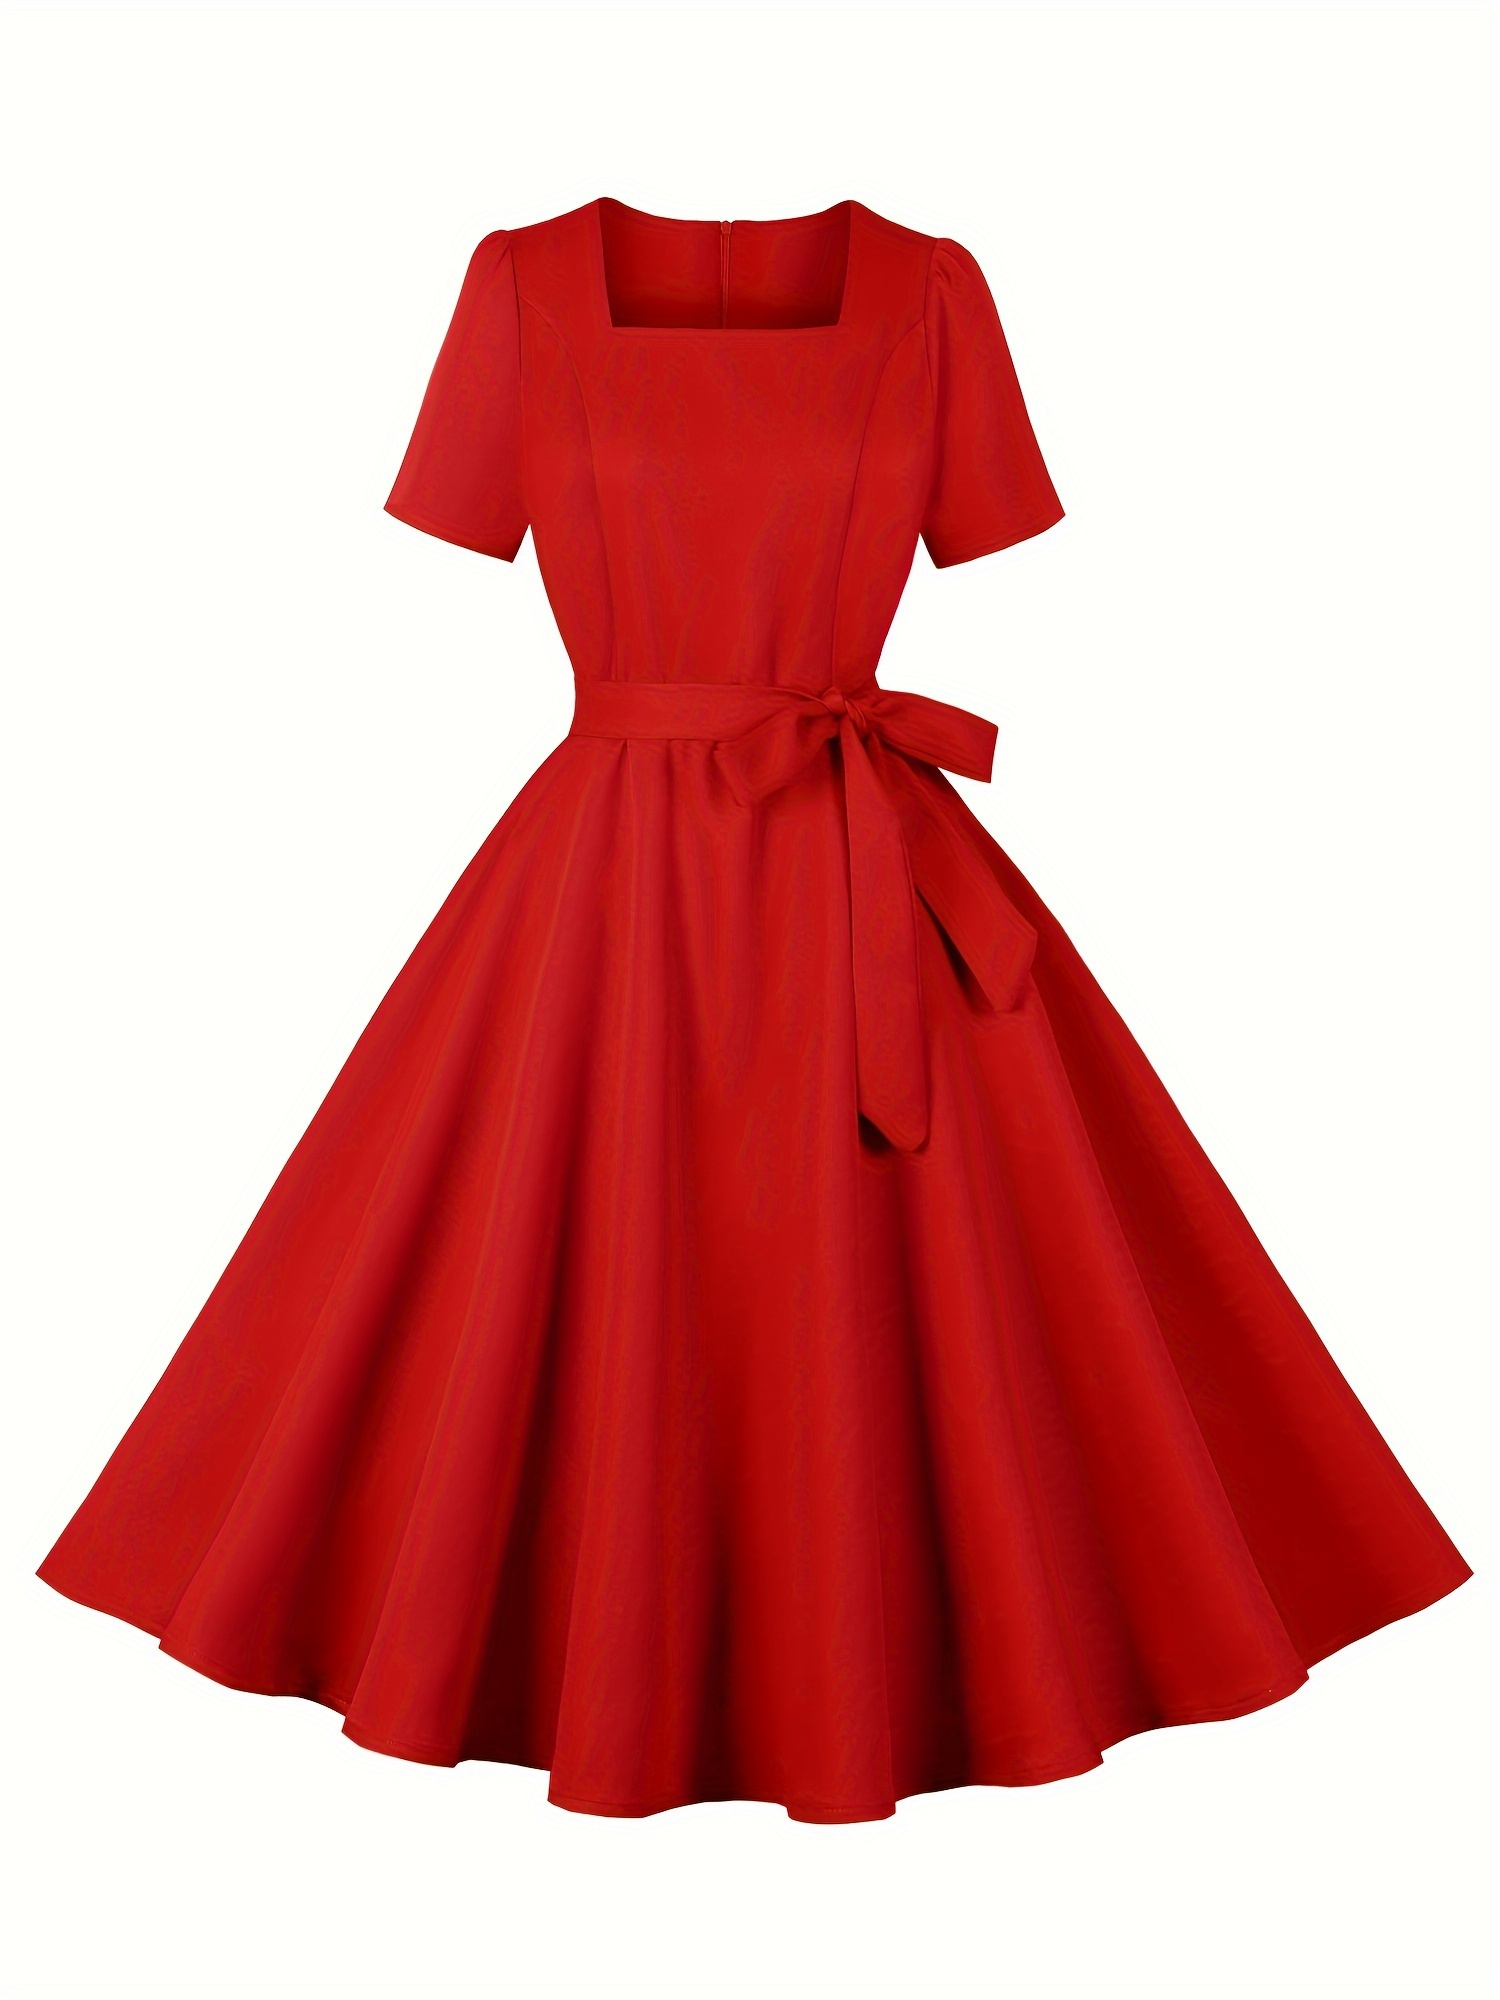 solid color a line dress elegant short sleeve dress for spring summer womens clothing